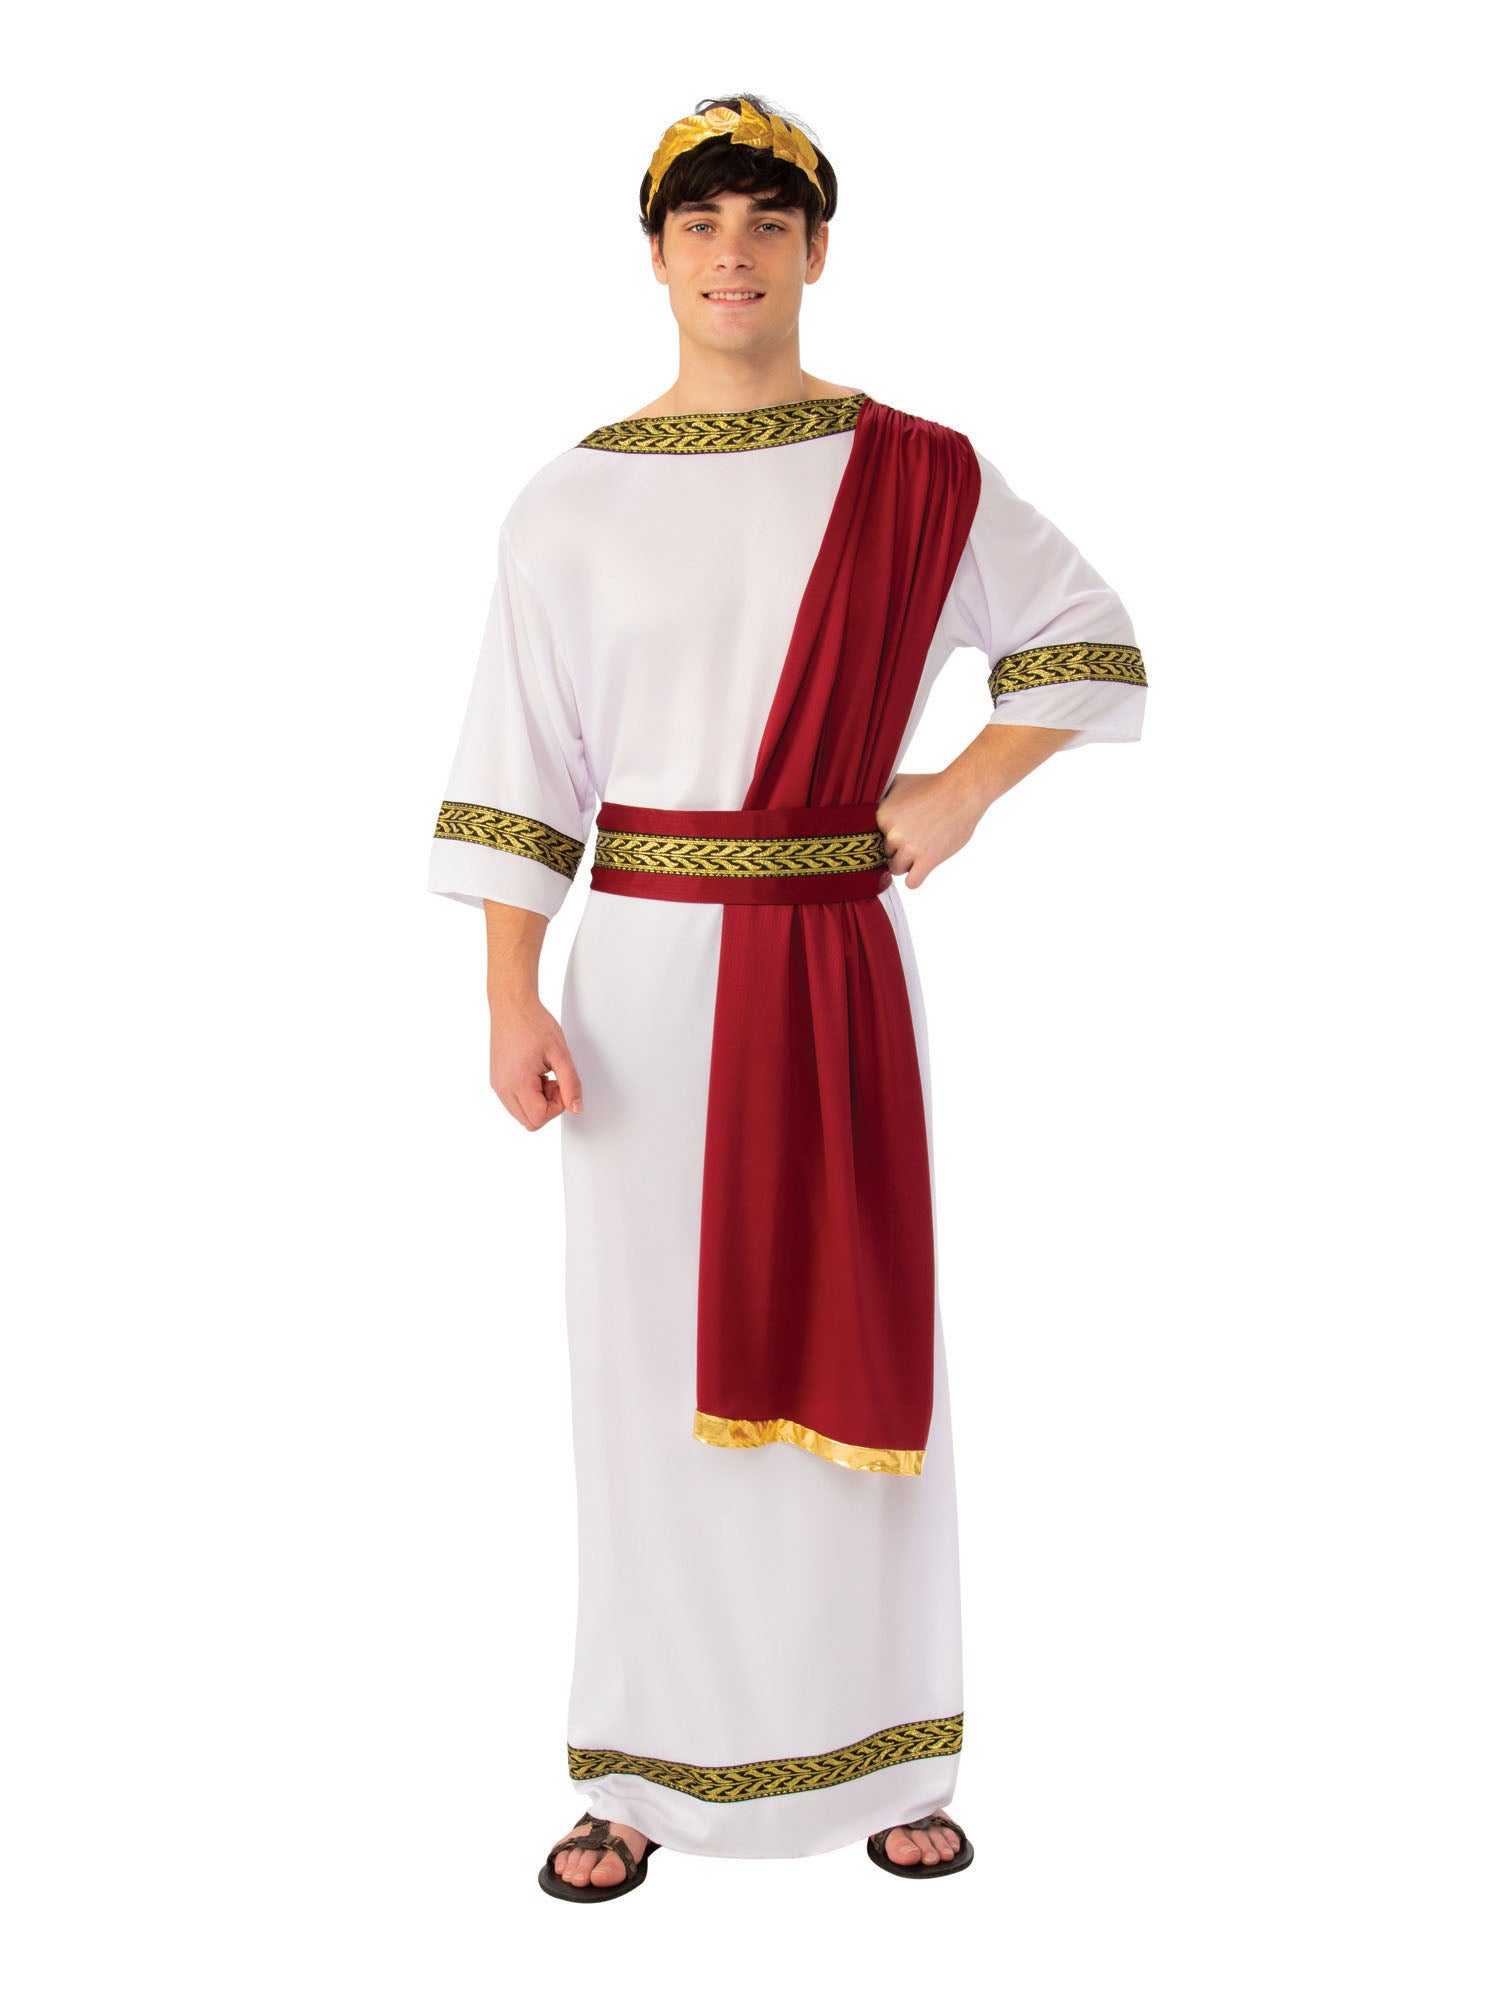 Greek, Multi, Generic, Adult Costume, Standard, Front